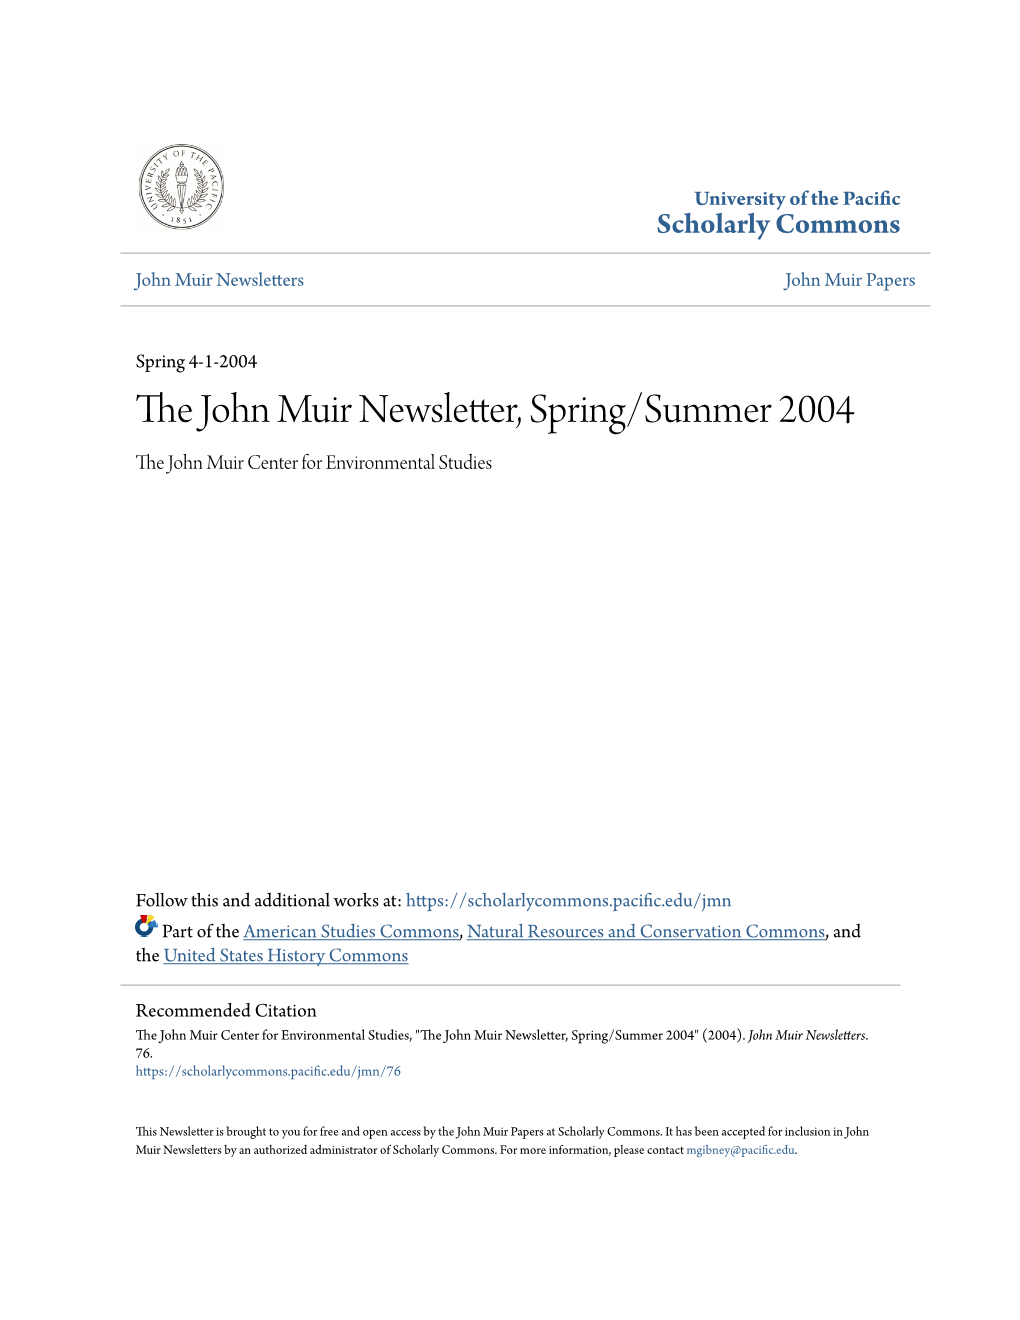 The John Muir Newsletter, Spring/Summer 2004